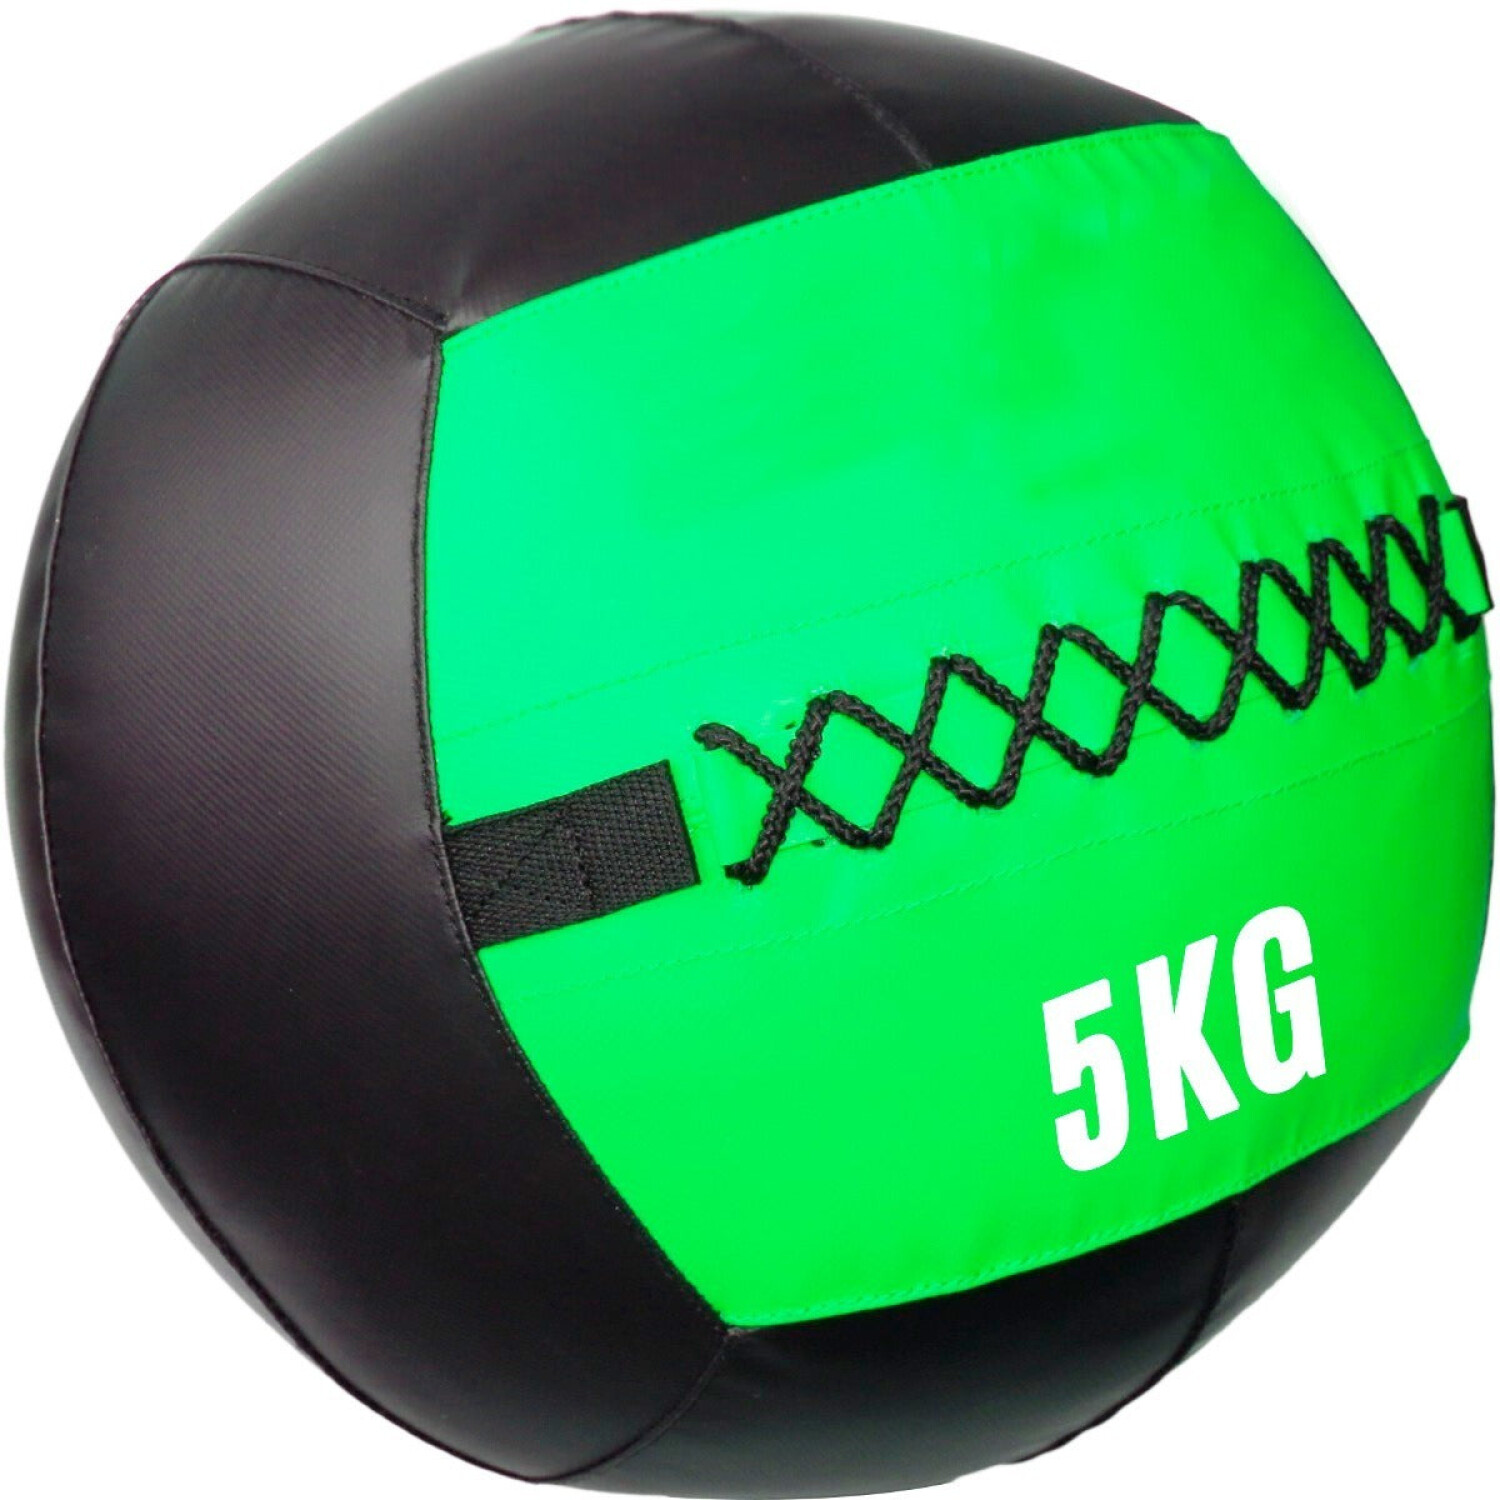 Balón medicinal Singular WOD 5 kg